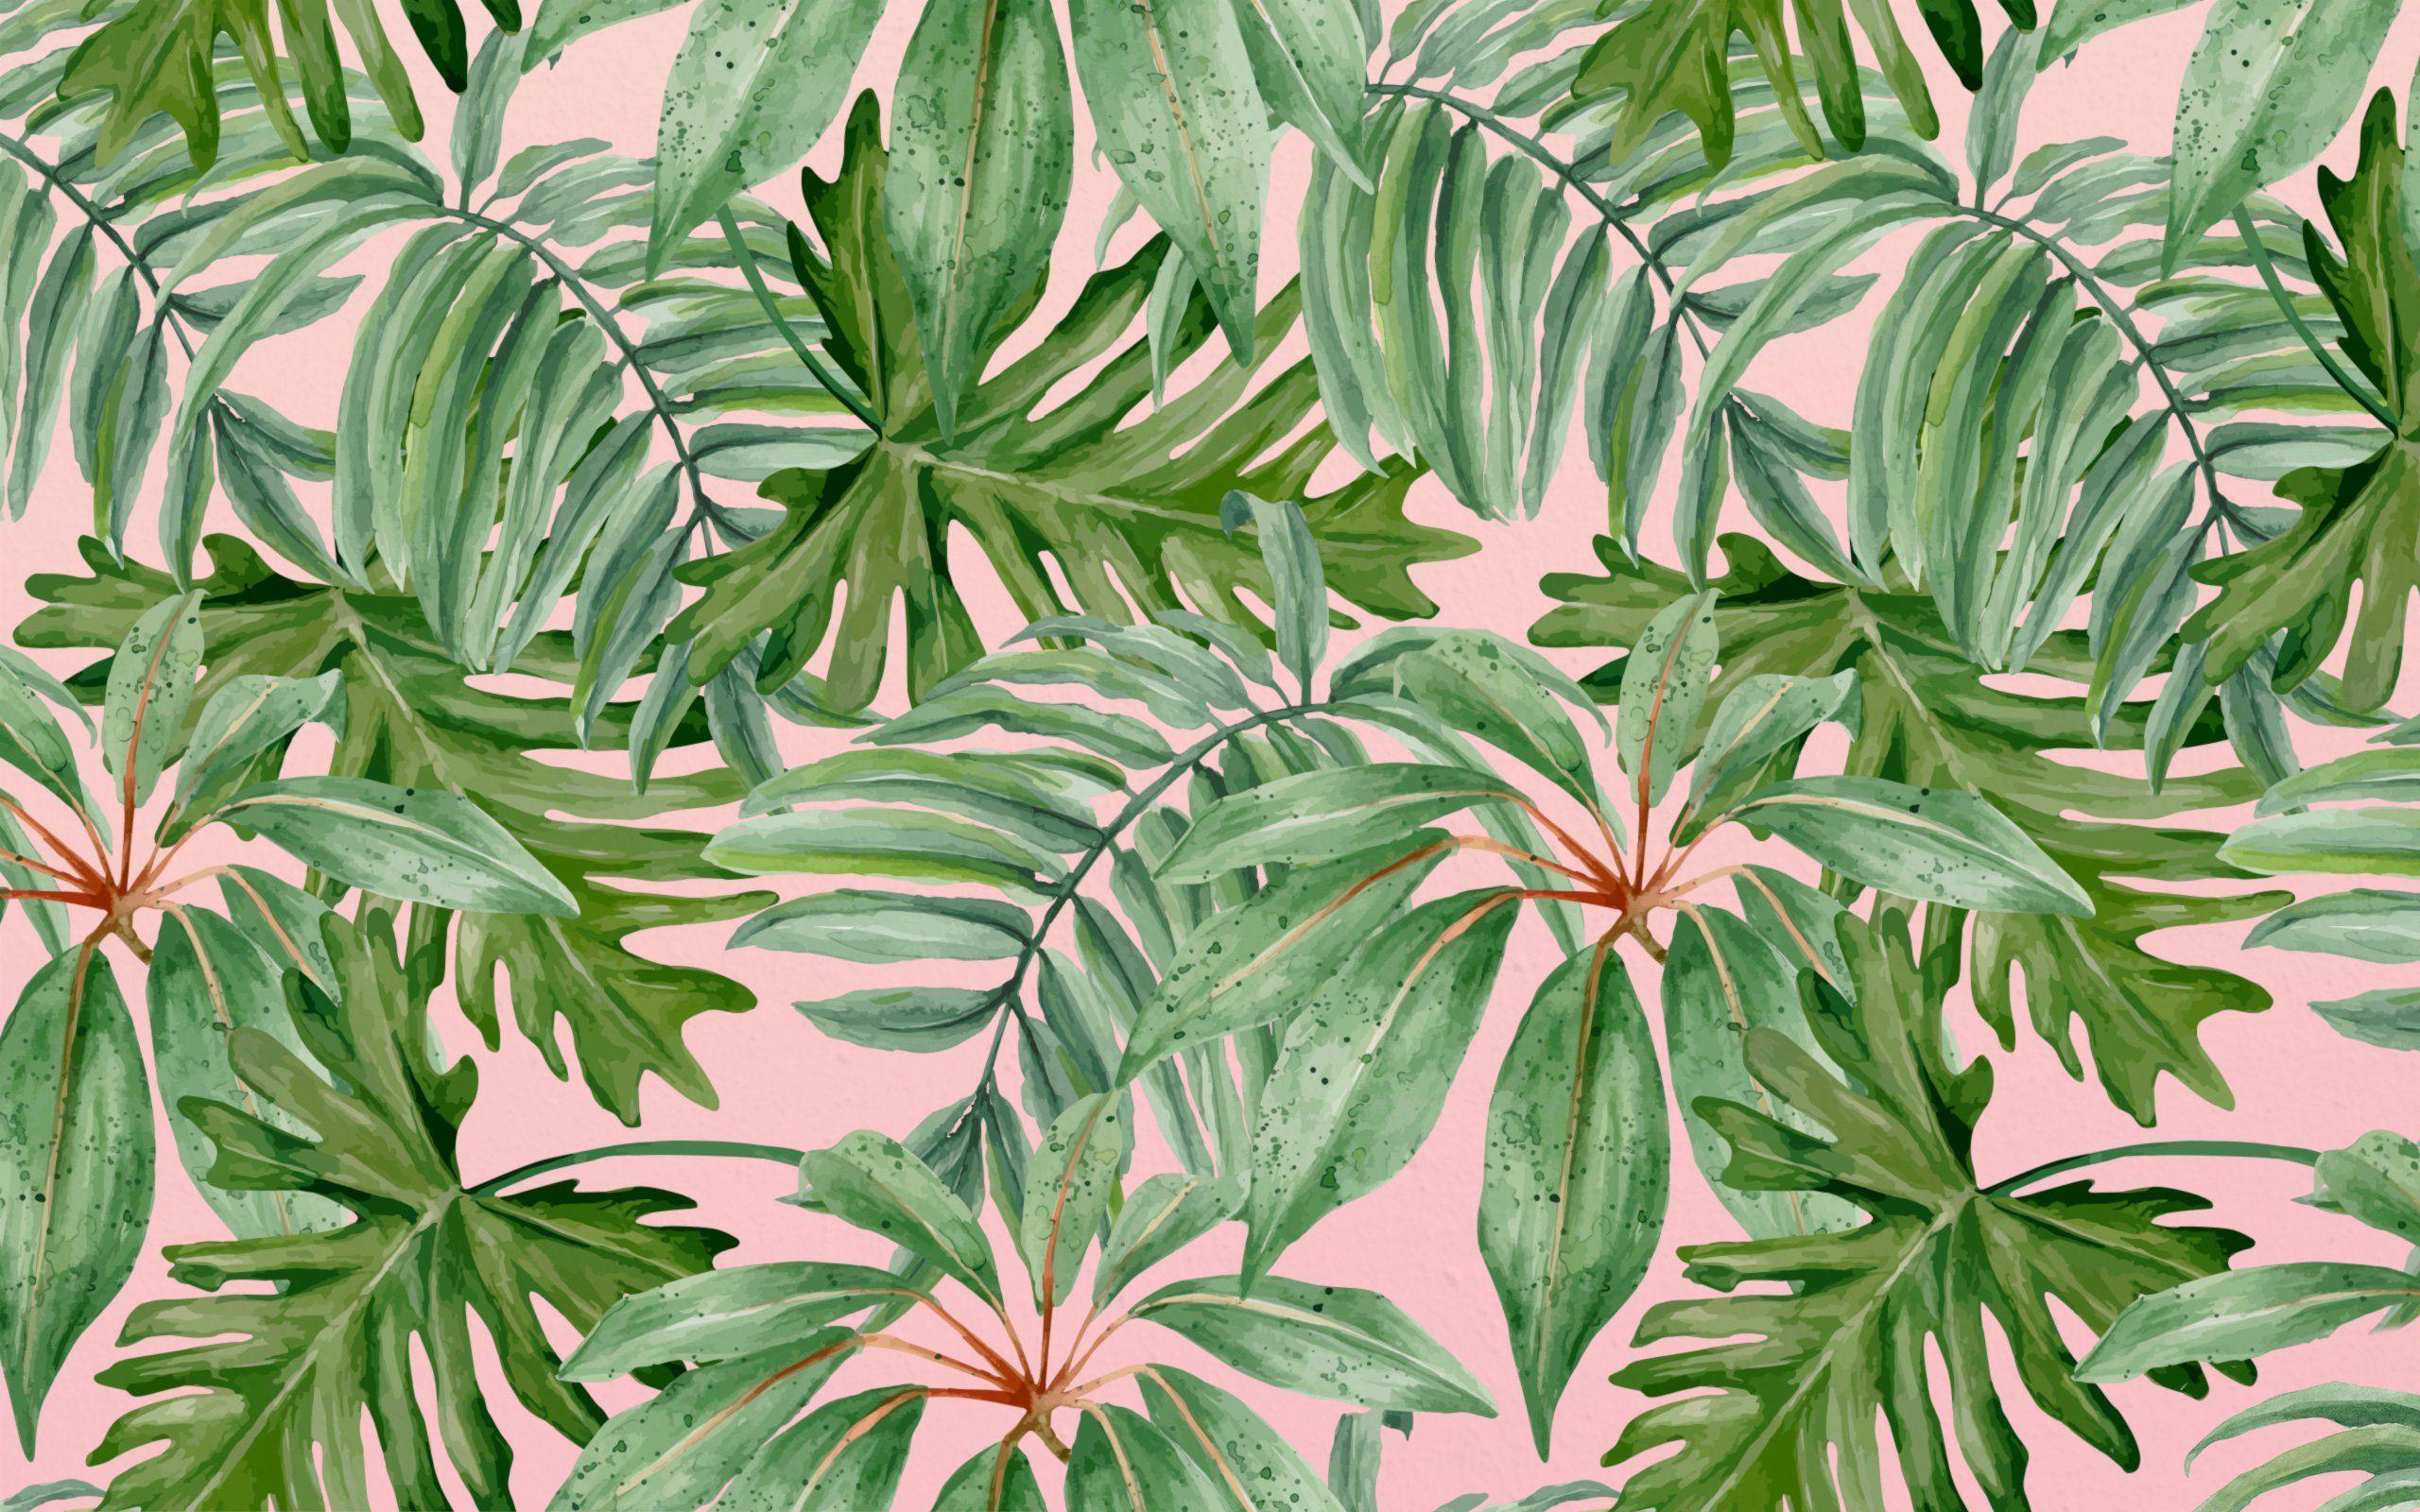 Marburg Attalea Green Palm Leaf Wallpaper at Lowescom